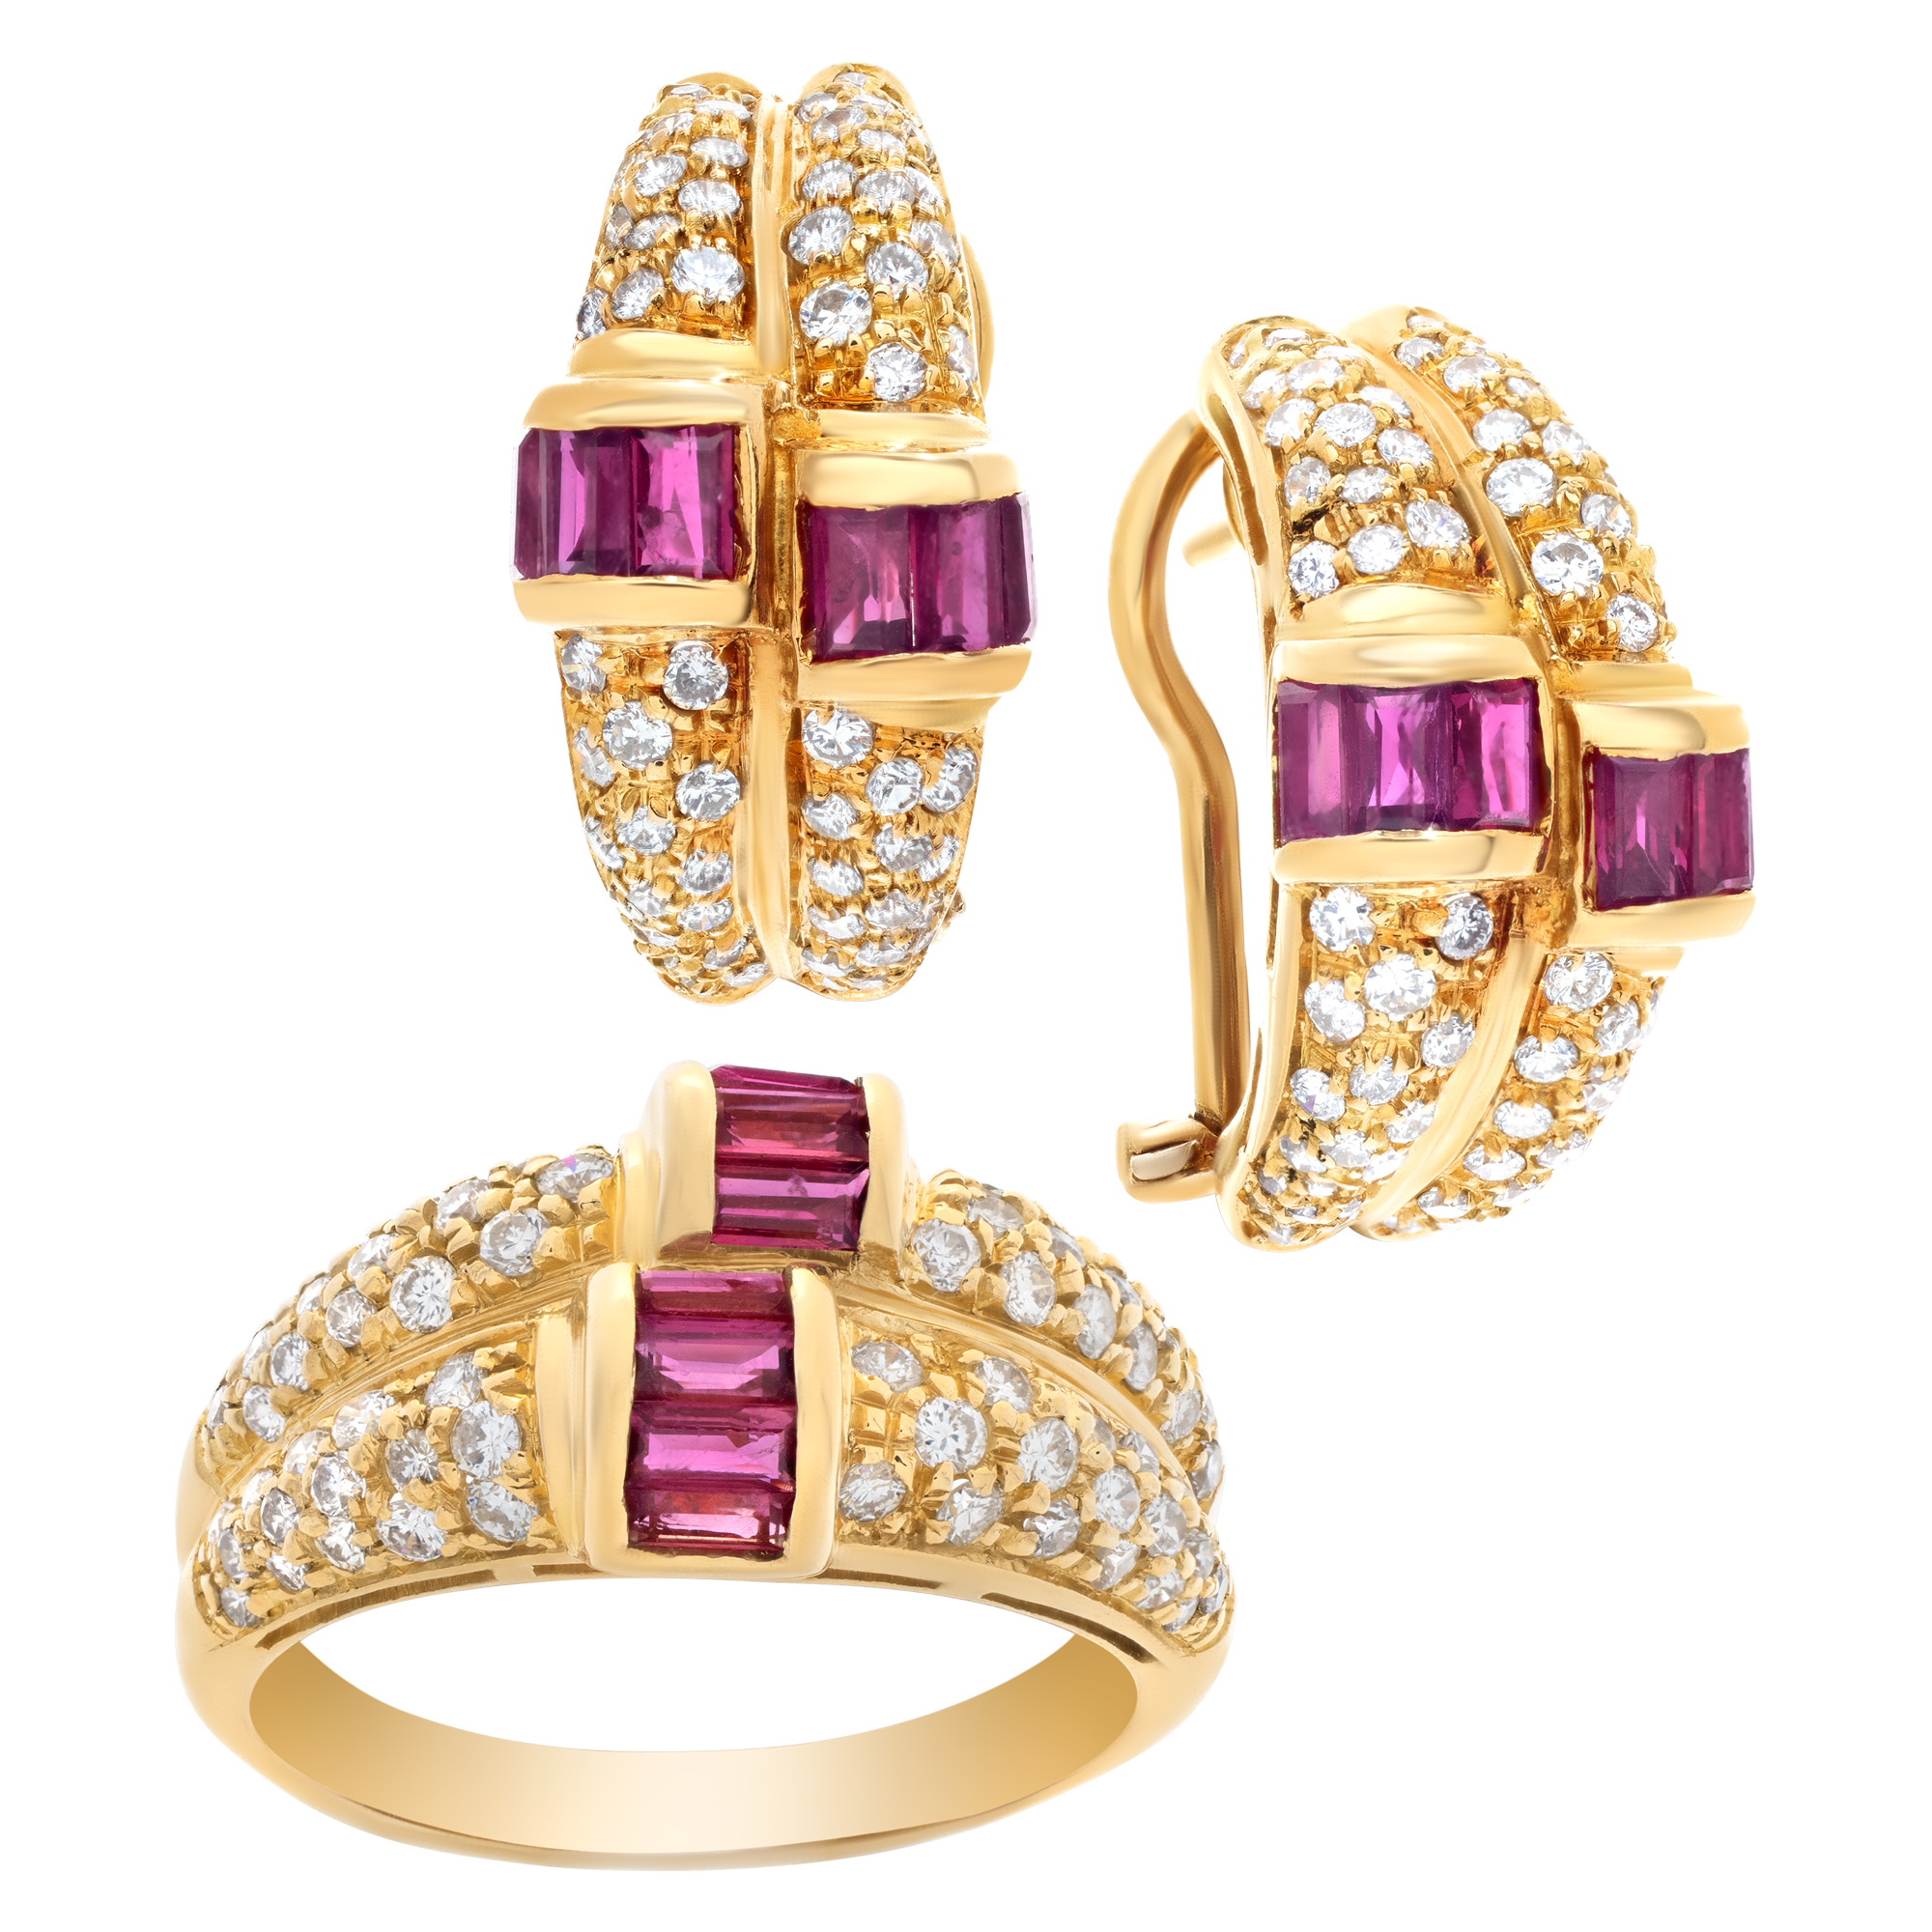 Ruby & diamond earrings and ring set in 18k